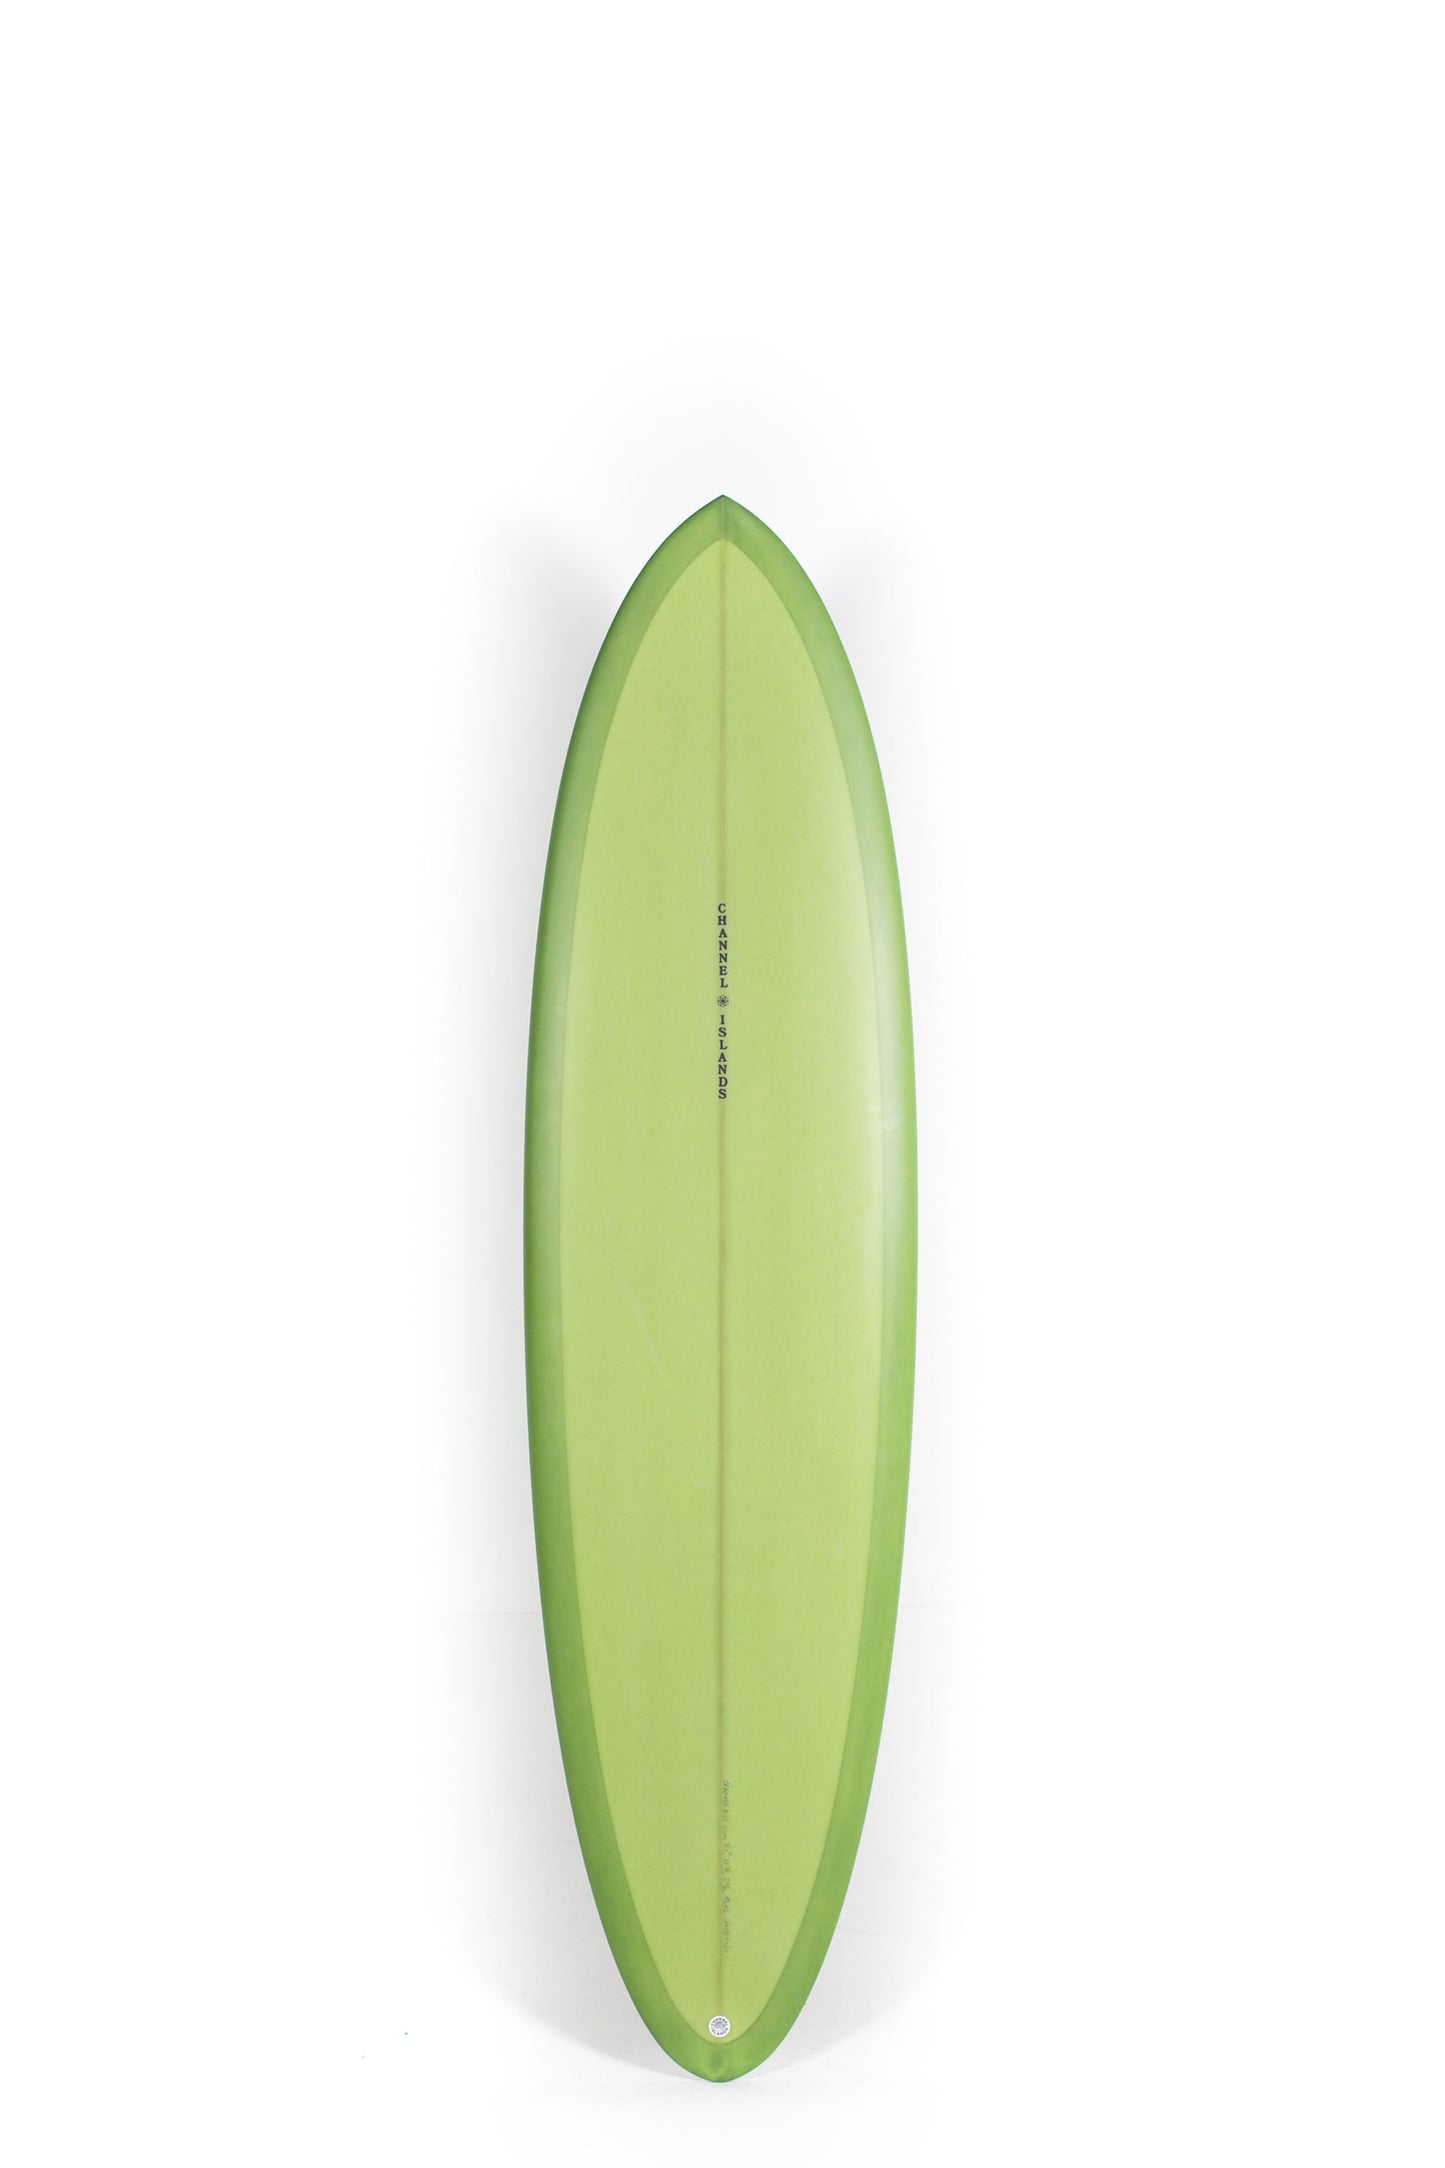 CHANNEL ISLANDS SURFBOARDS | Shop at PUKAS SURF SHOP – Page 3